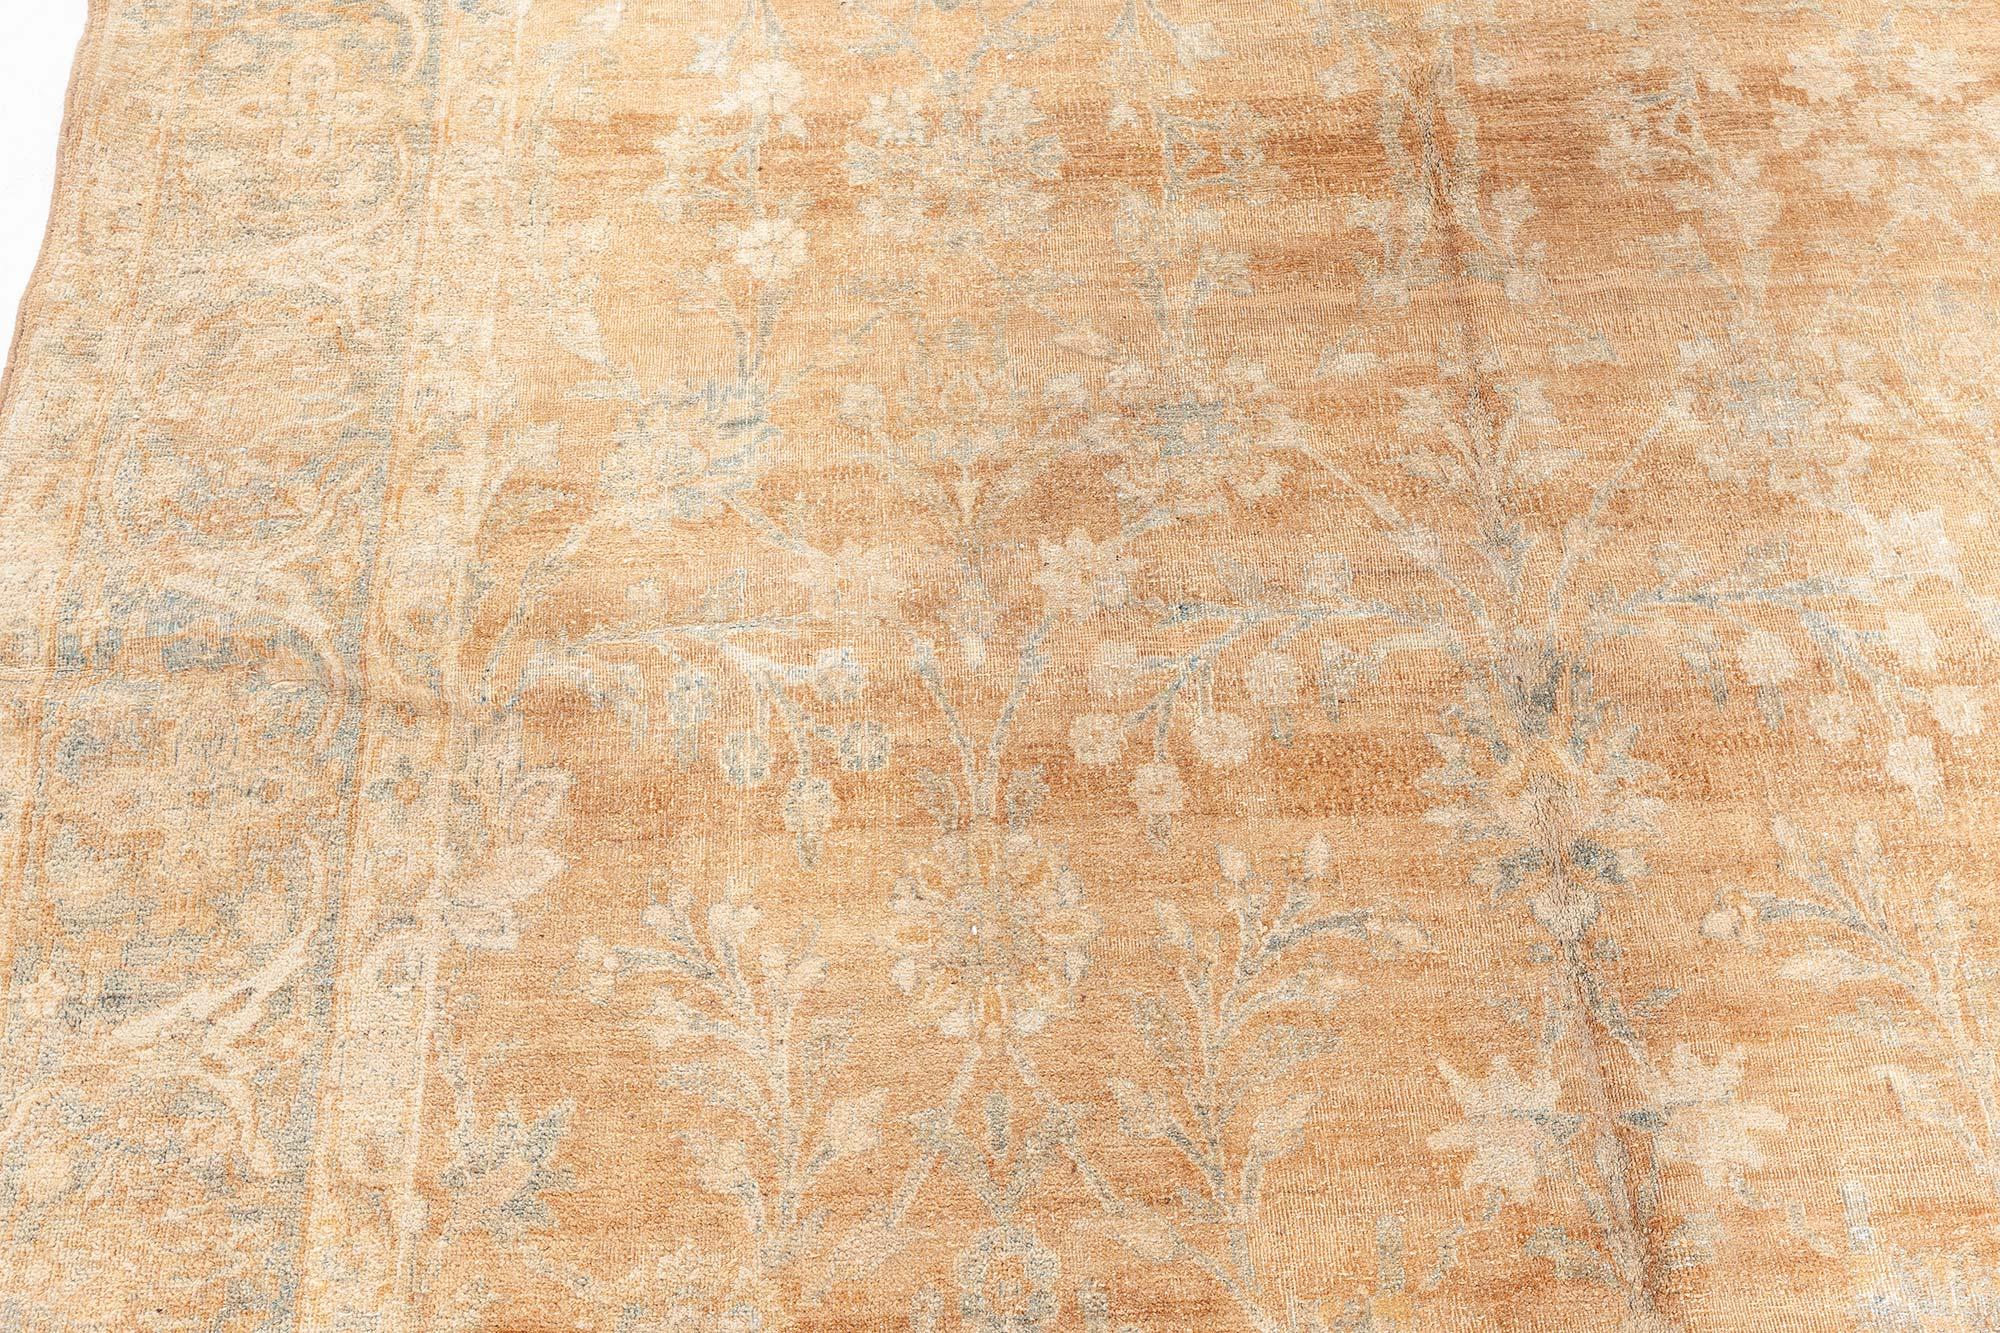 Antique Persian Tabriz brown handwoven wool carpet
Size: 5'8